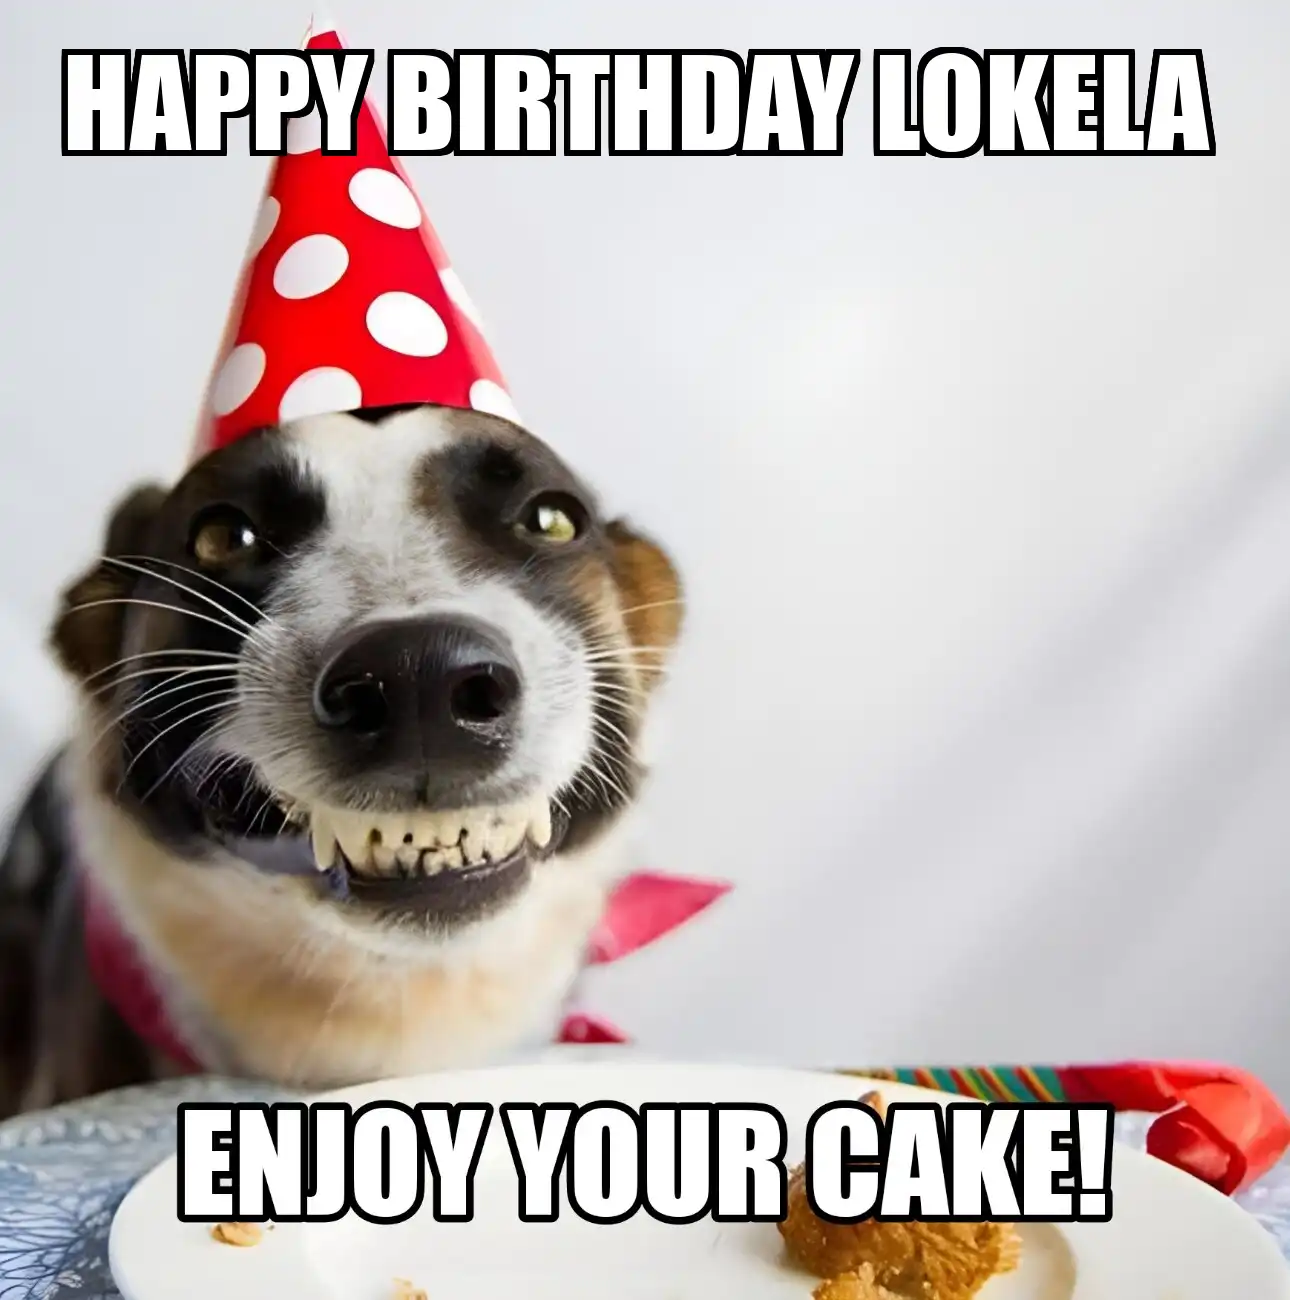 Happy Birthday Lokela Enjoy Your Cake Dog Meme